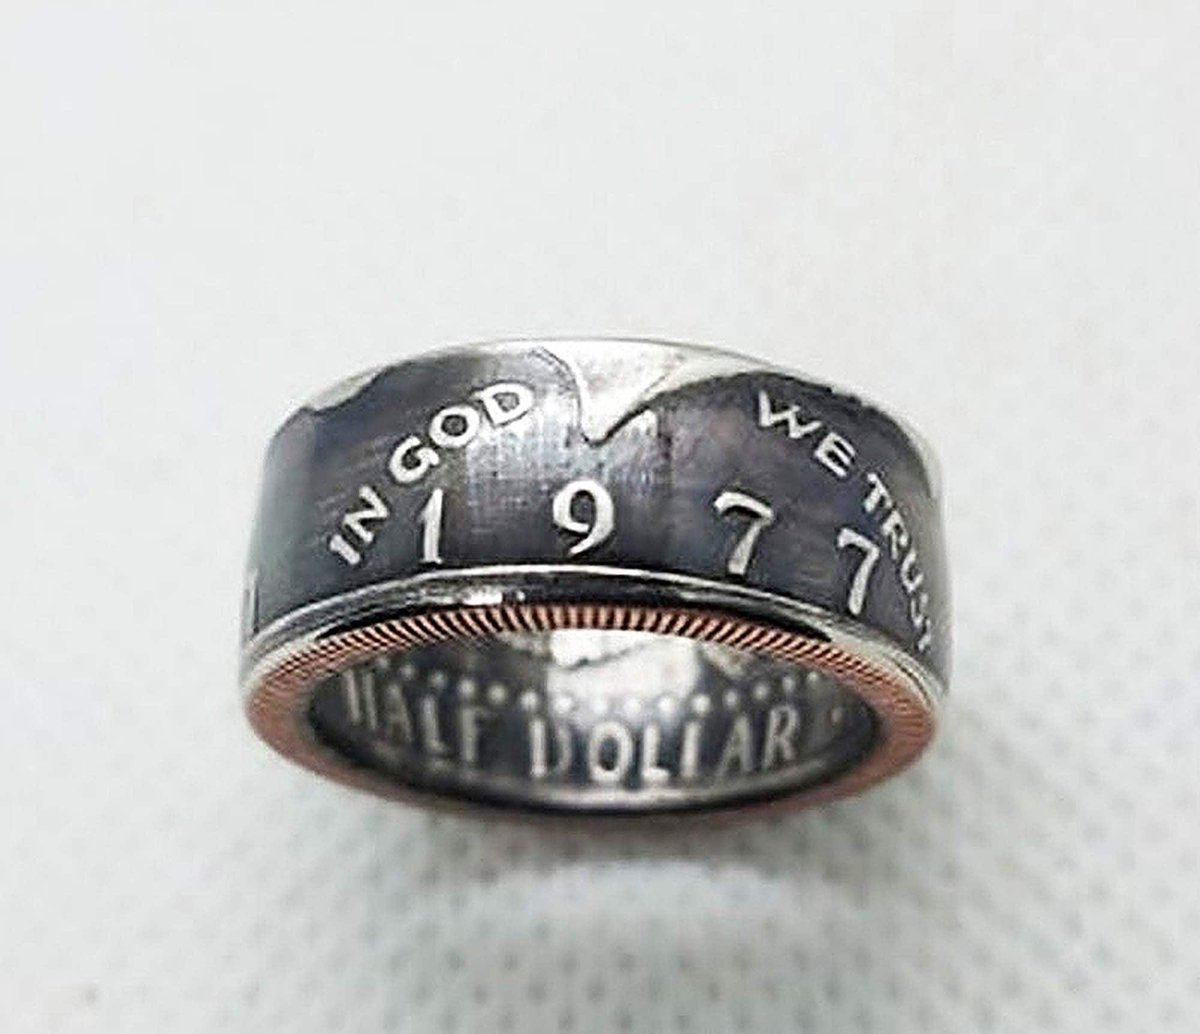 1977 JFK Half Dollar Coin Ring cjringsnthings.com/coin-ring-1977… #JFK #Half #Dollar #coin #ring #CJRingsNThings #giftforhim #giftforher #anniversarygift #Birthday #mothersdaygift